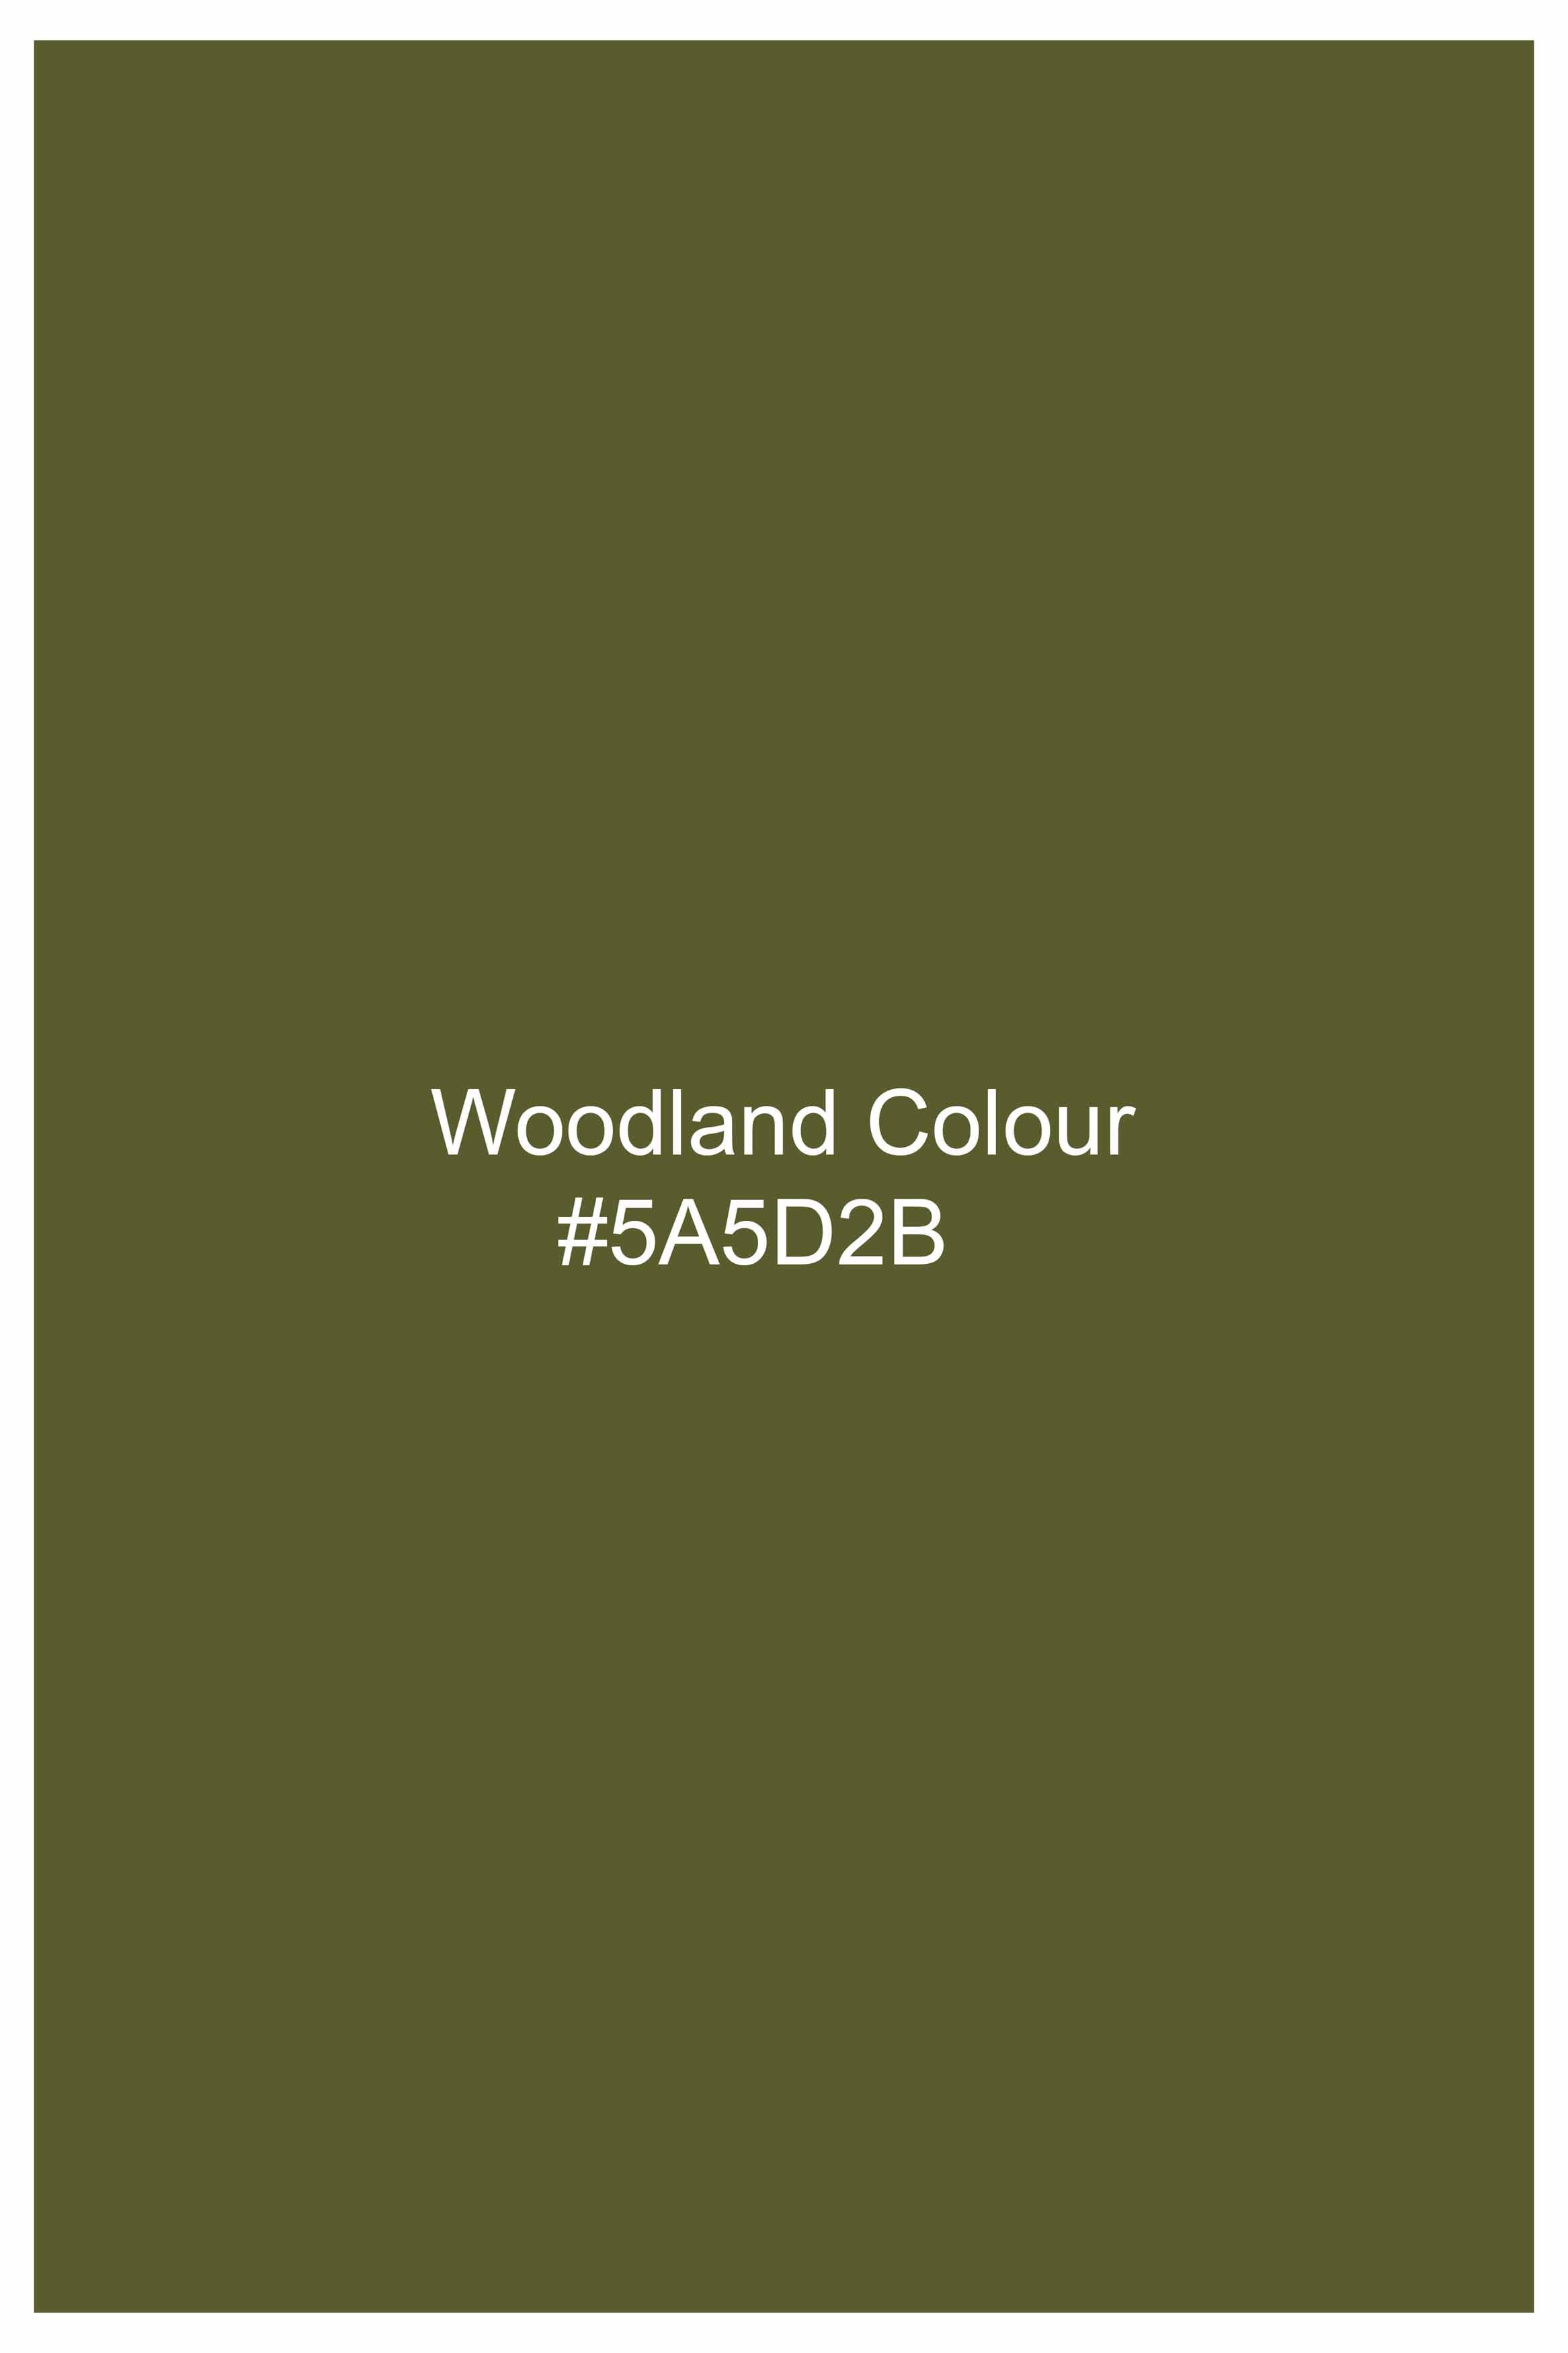 Woodland Green Flannel Designer Shirt